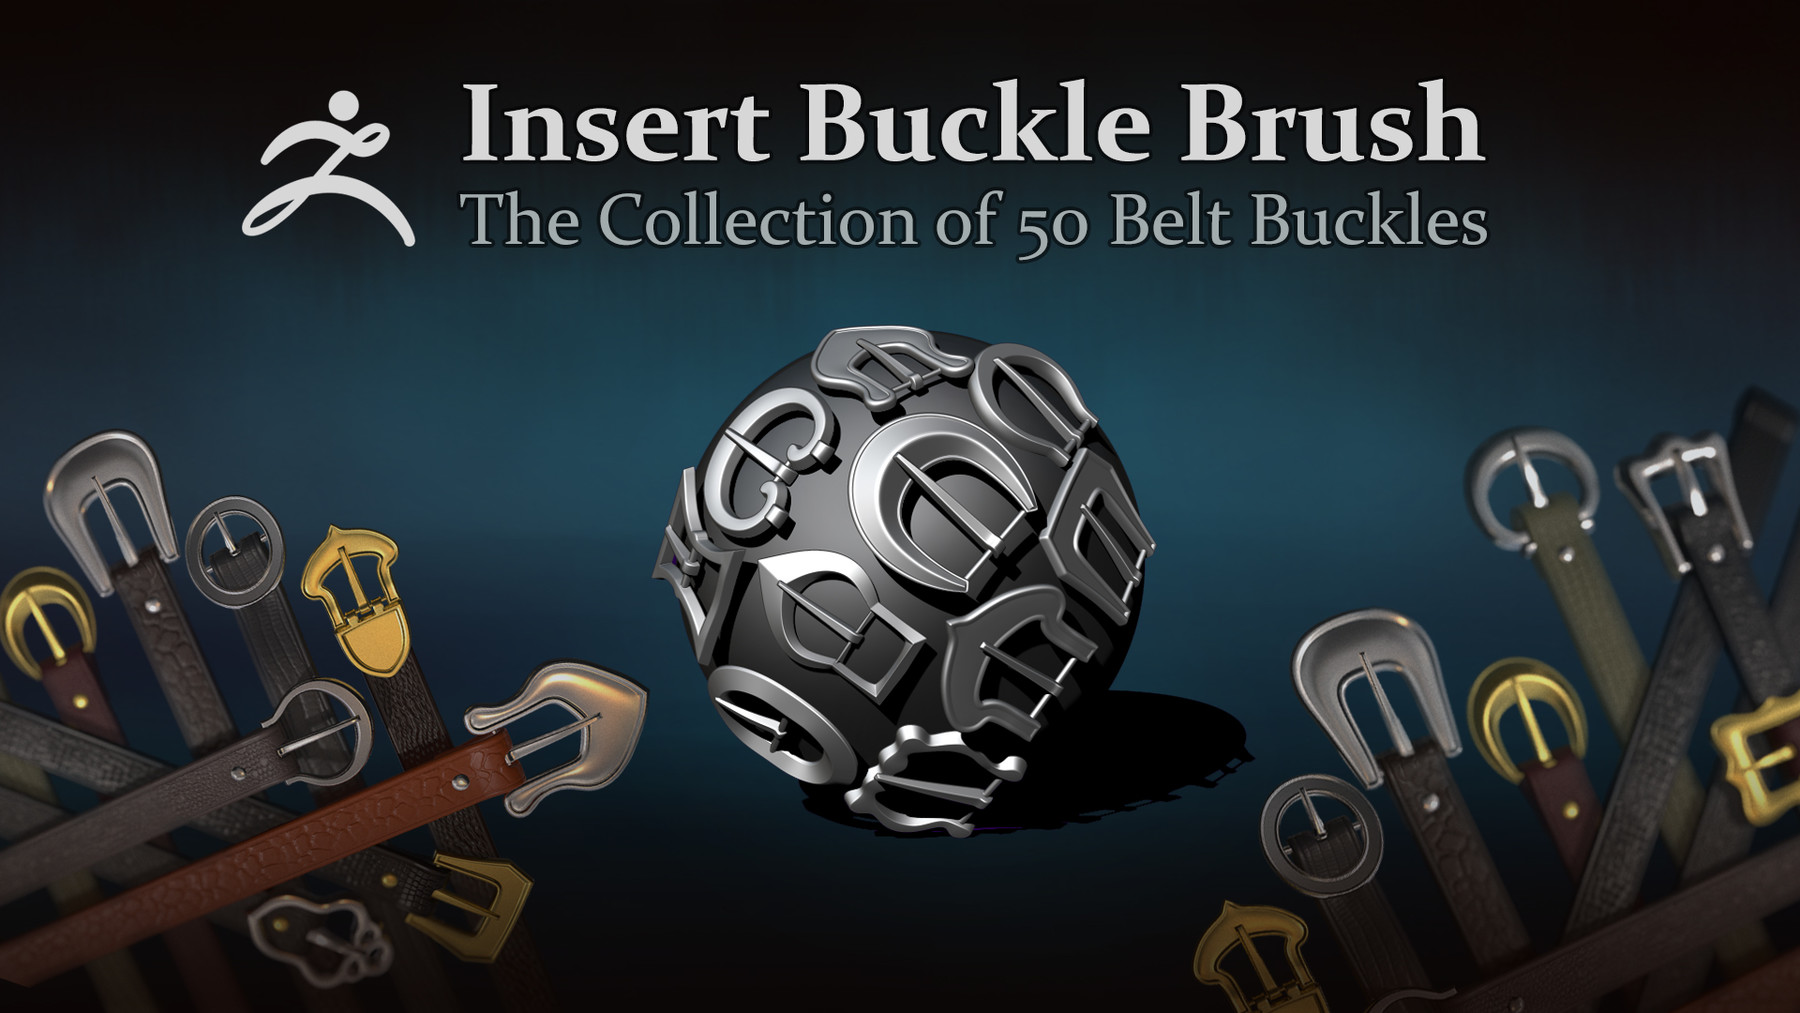 zbrush belt buckle